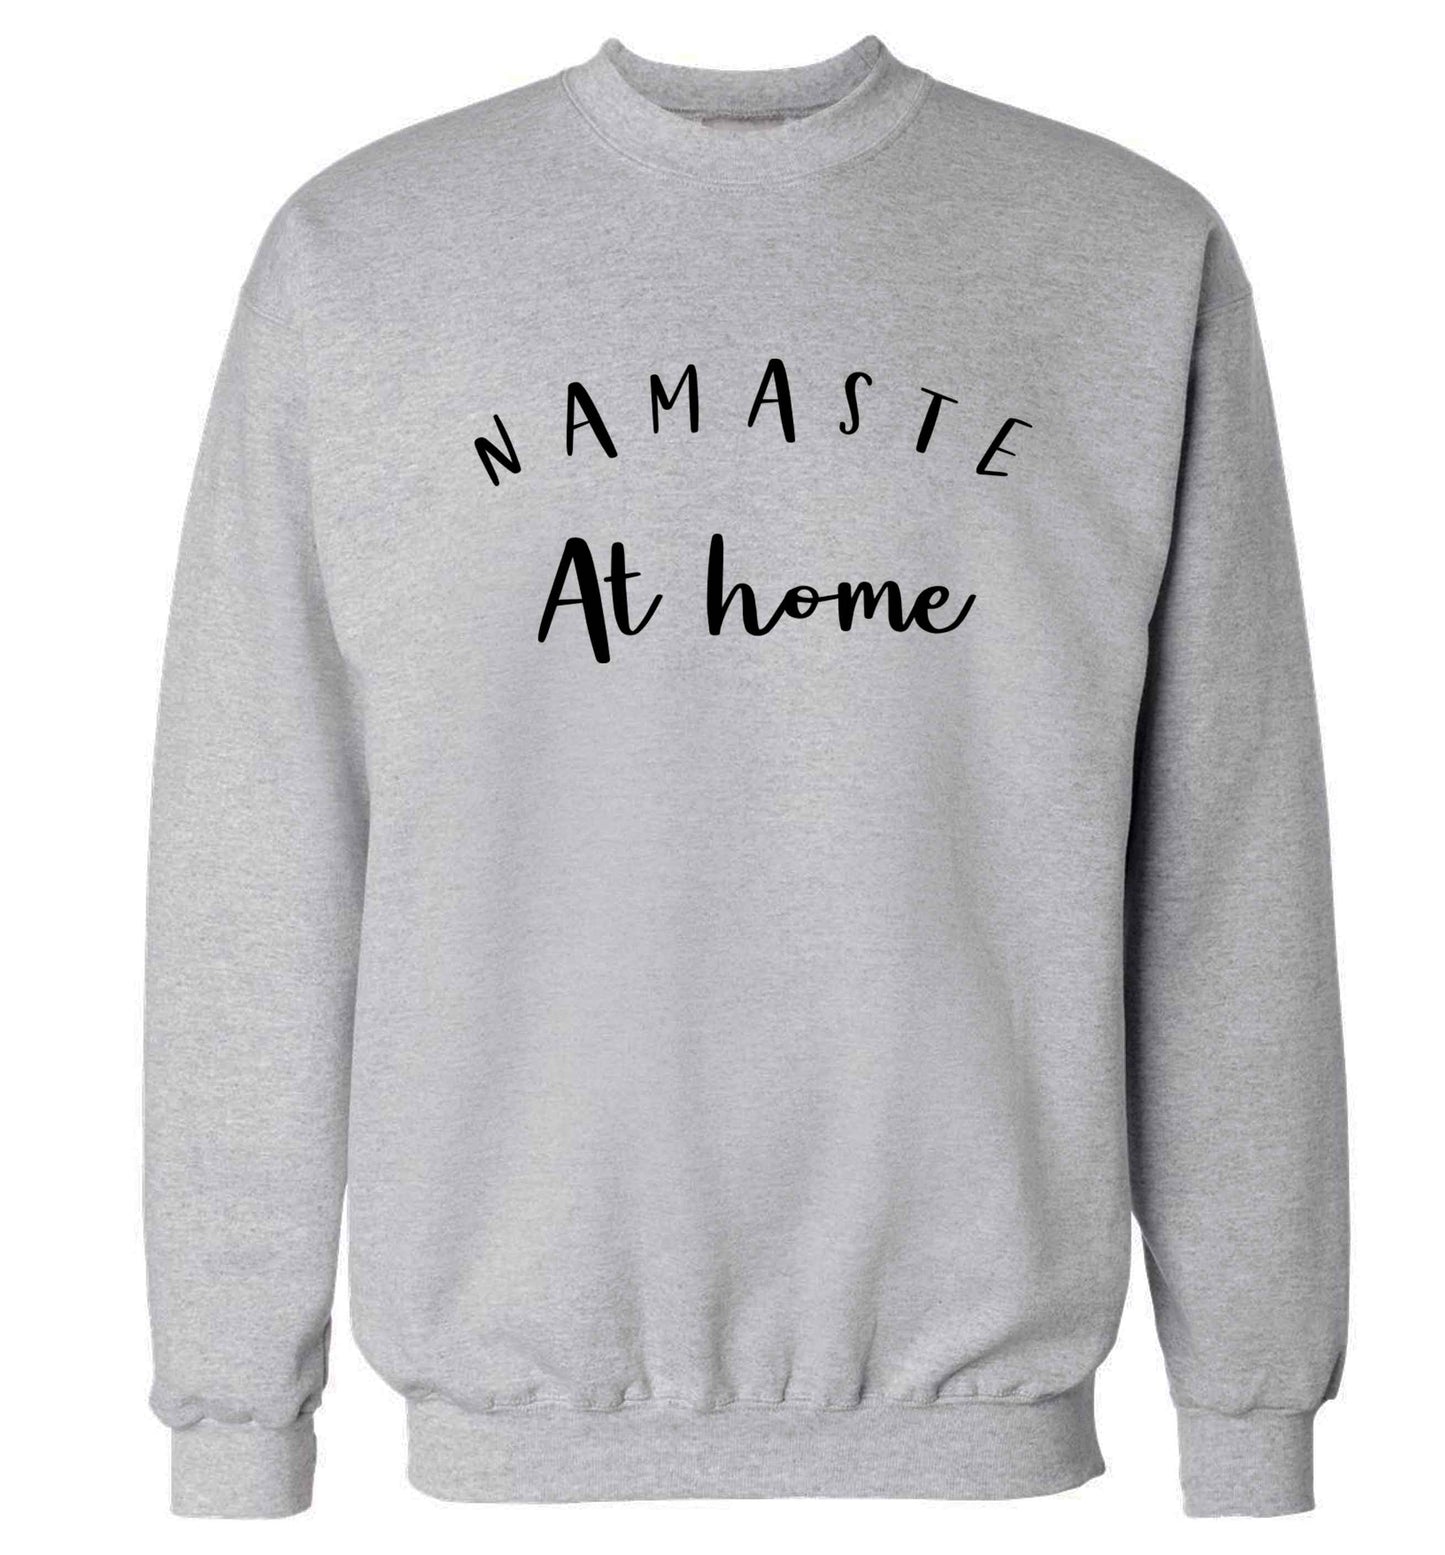 Namaste at home Adult's unisex grey Sweater 2XL